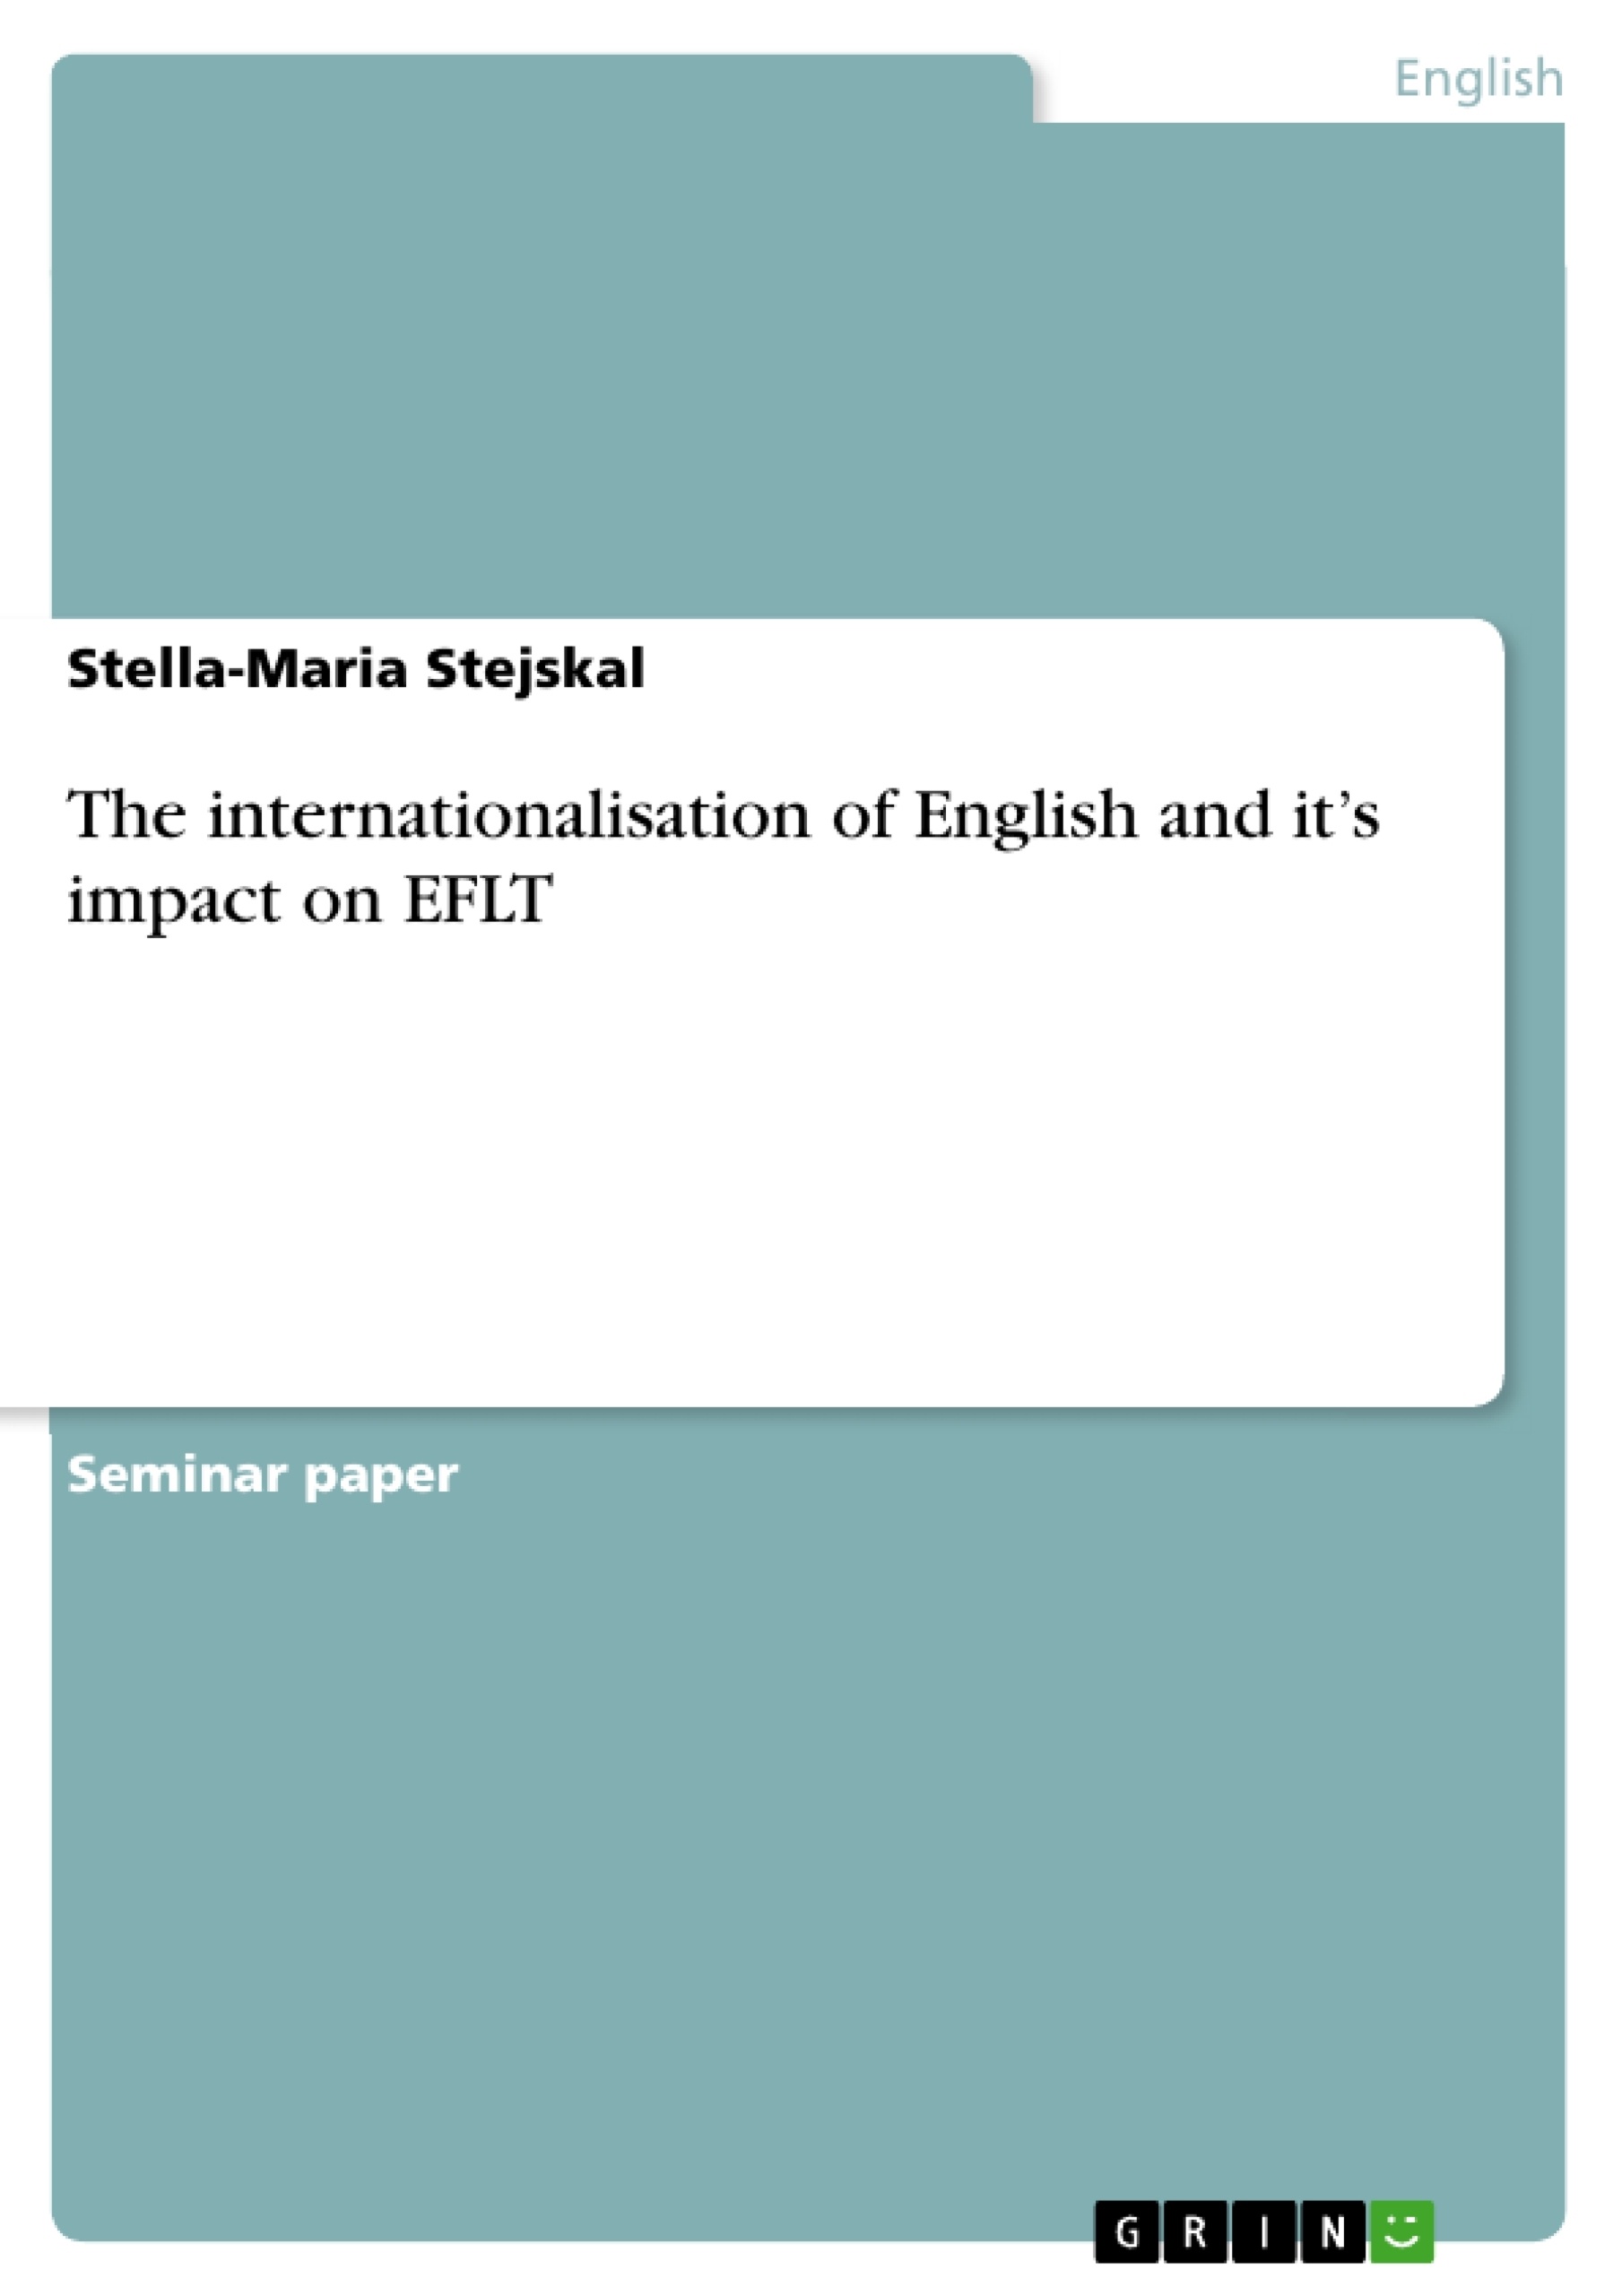 Title: The internationalisation of English and it’s impact on EFLT